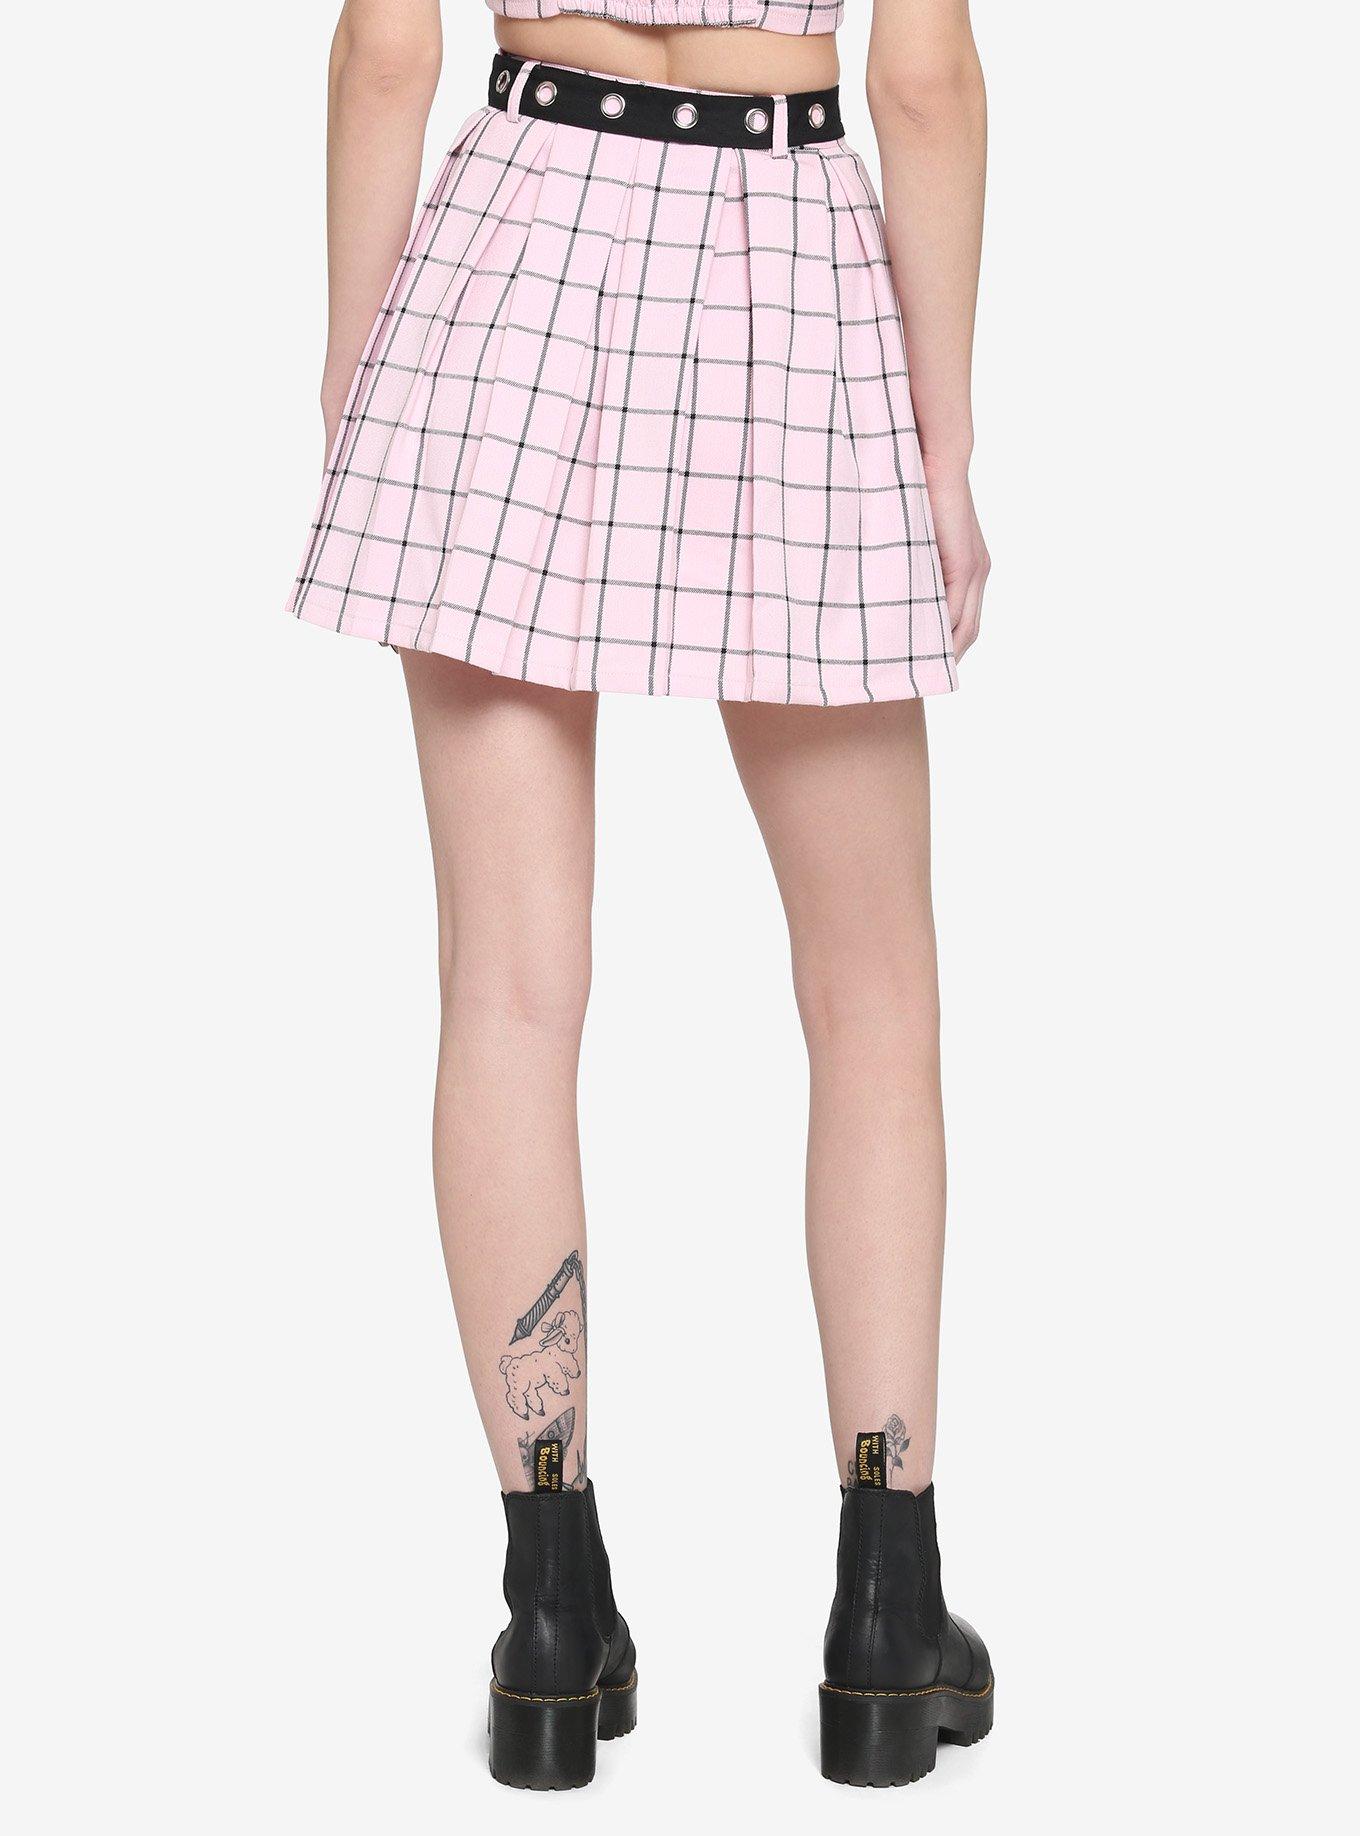 Pink & Black Grid Pleated Skirt With Grommet Belt, PLAID - PINK, alternate